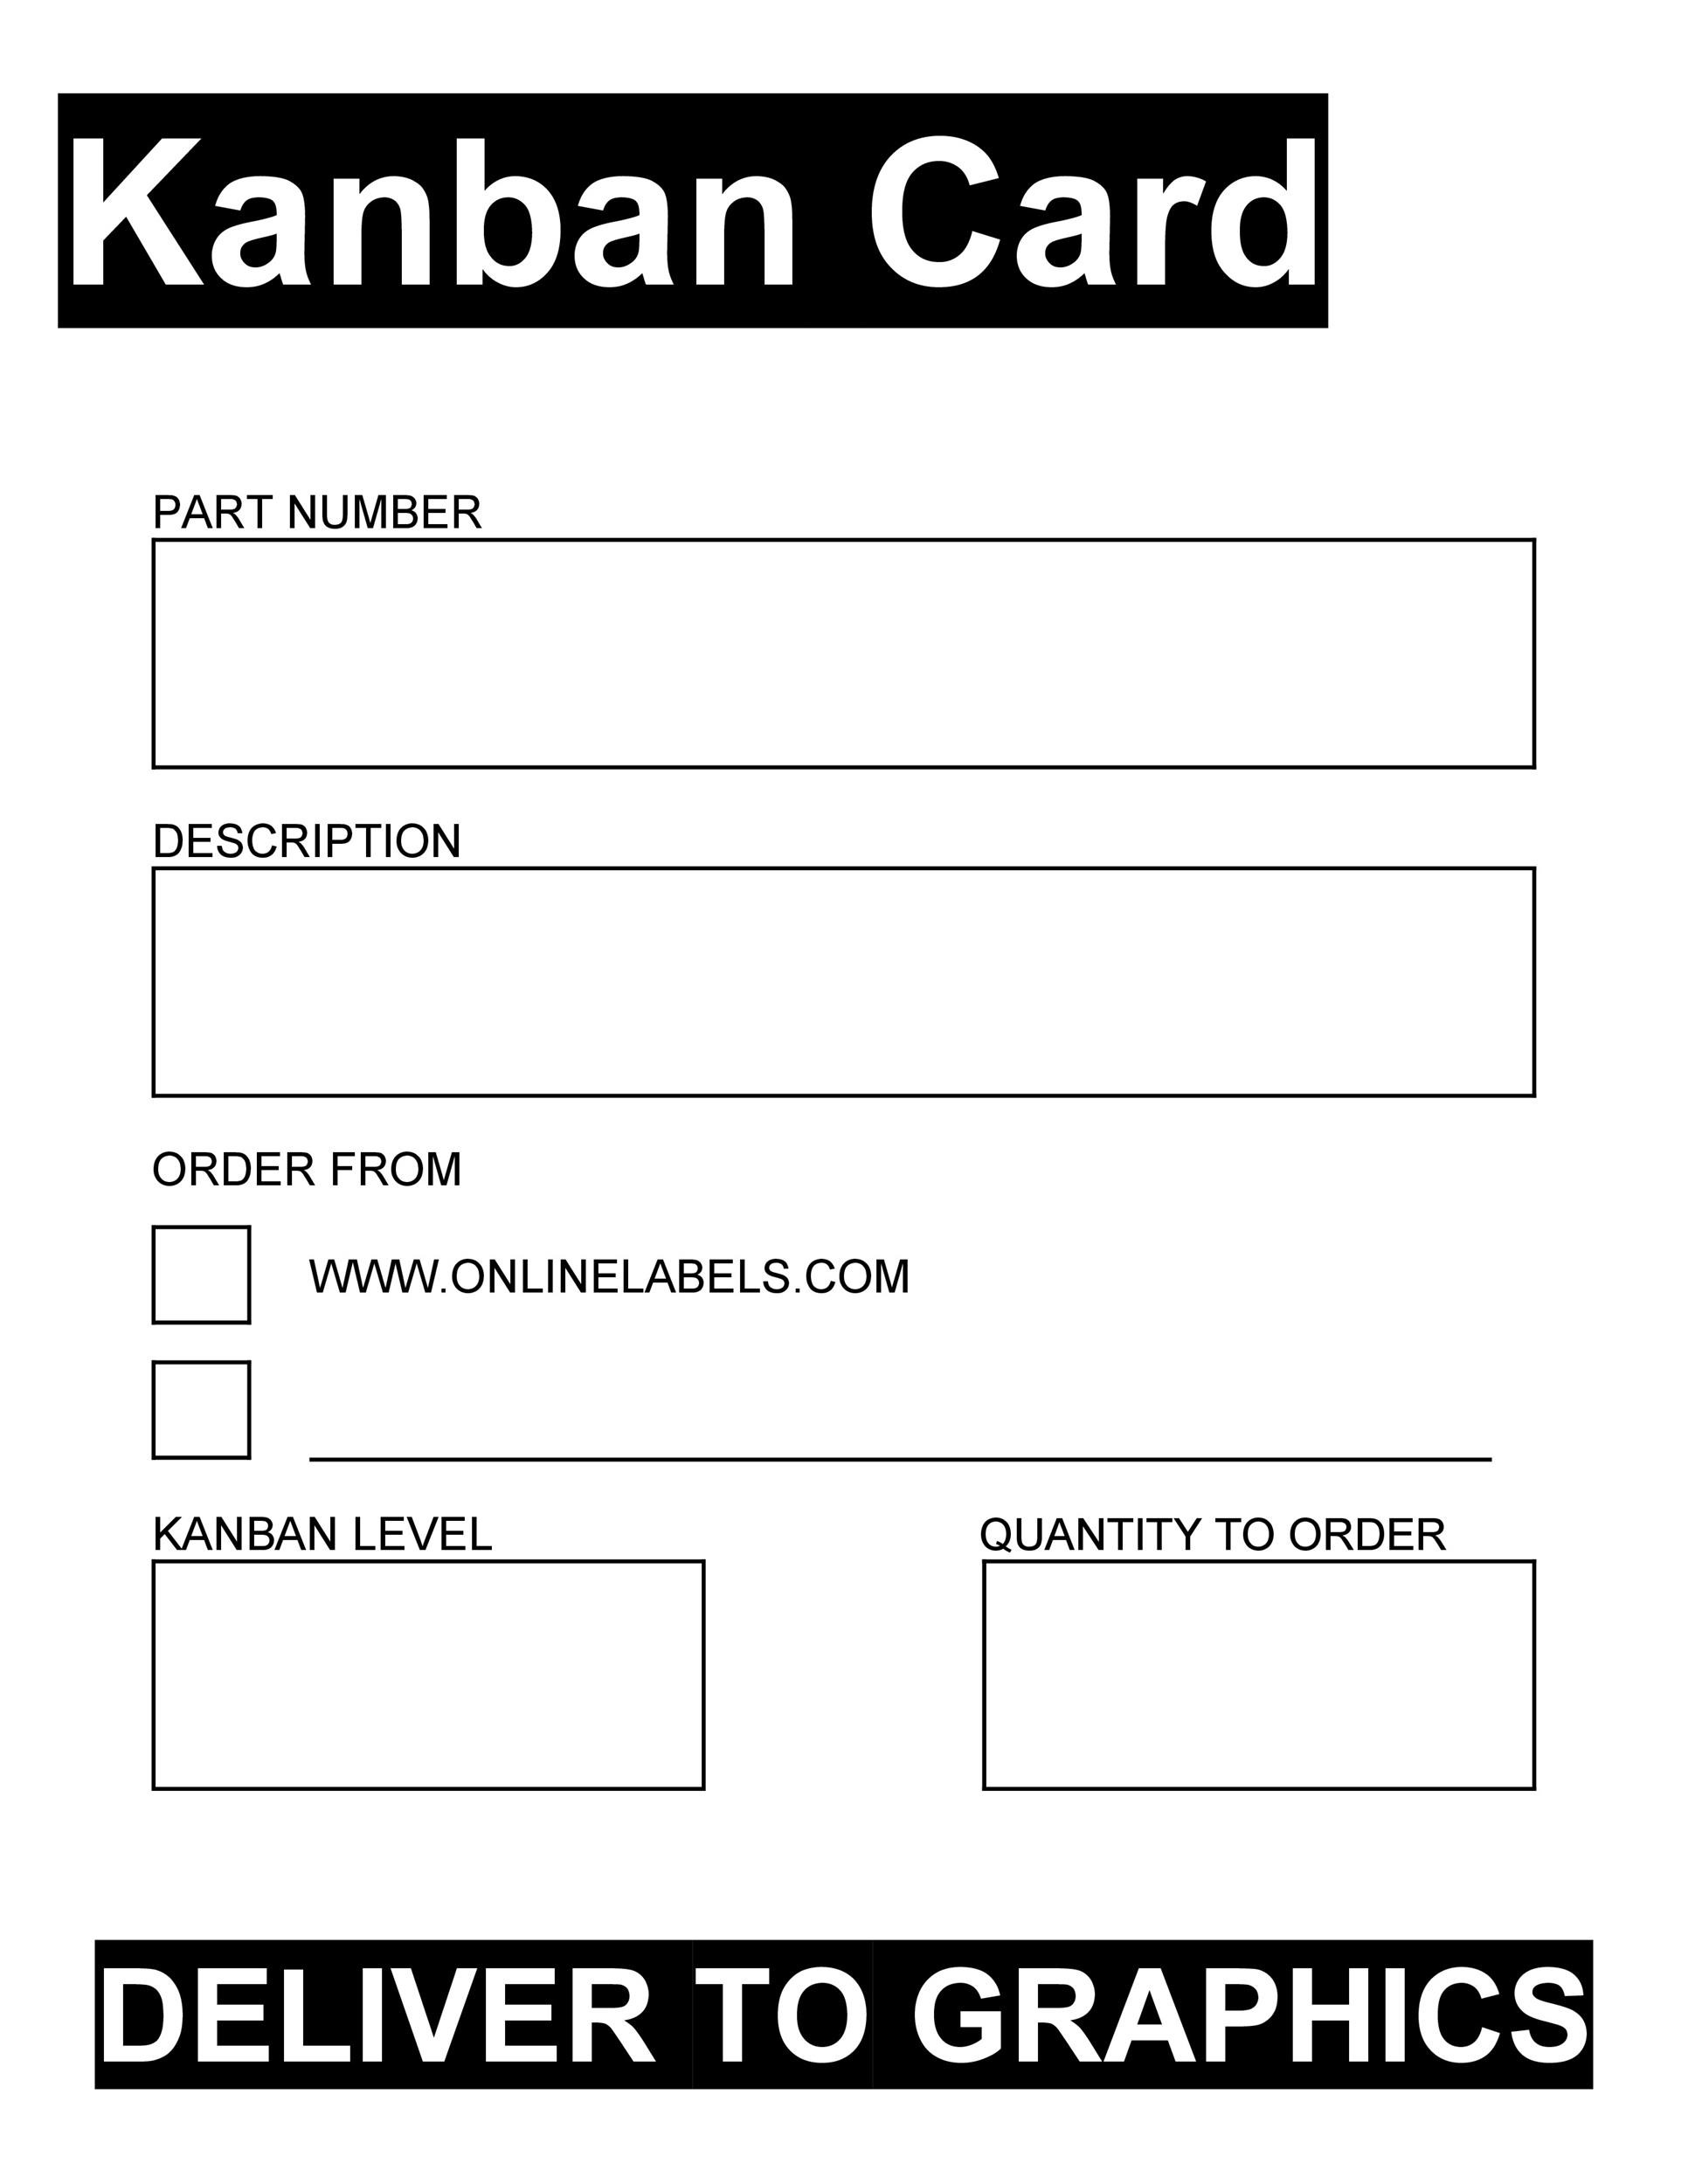 25-printable-kanban-card-templates-how-to-use-them-templatelab-vrogue